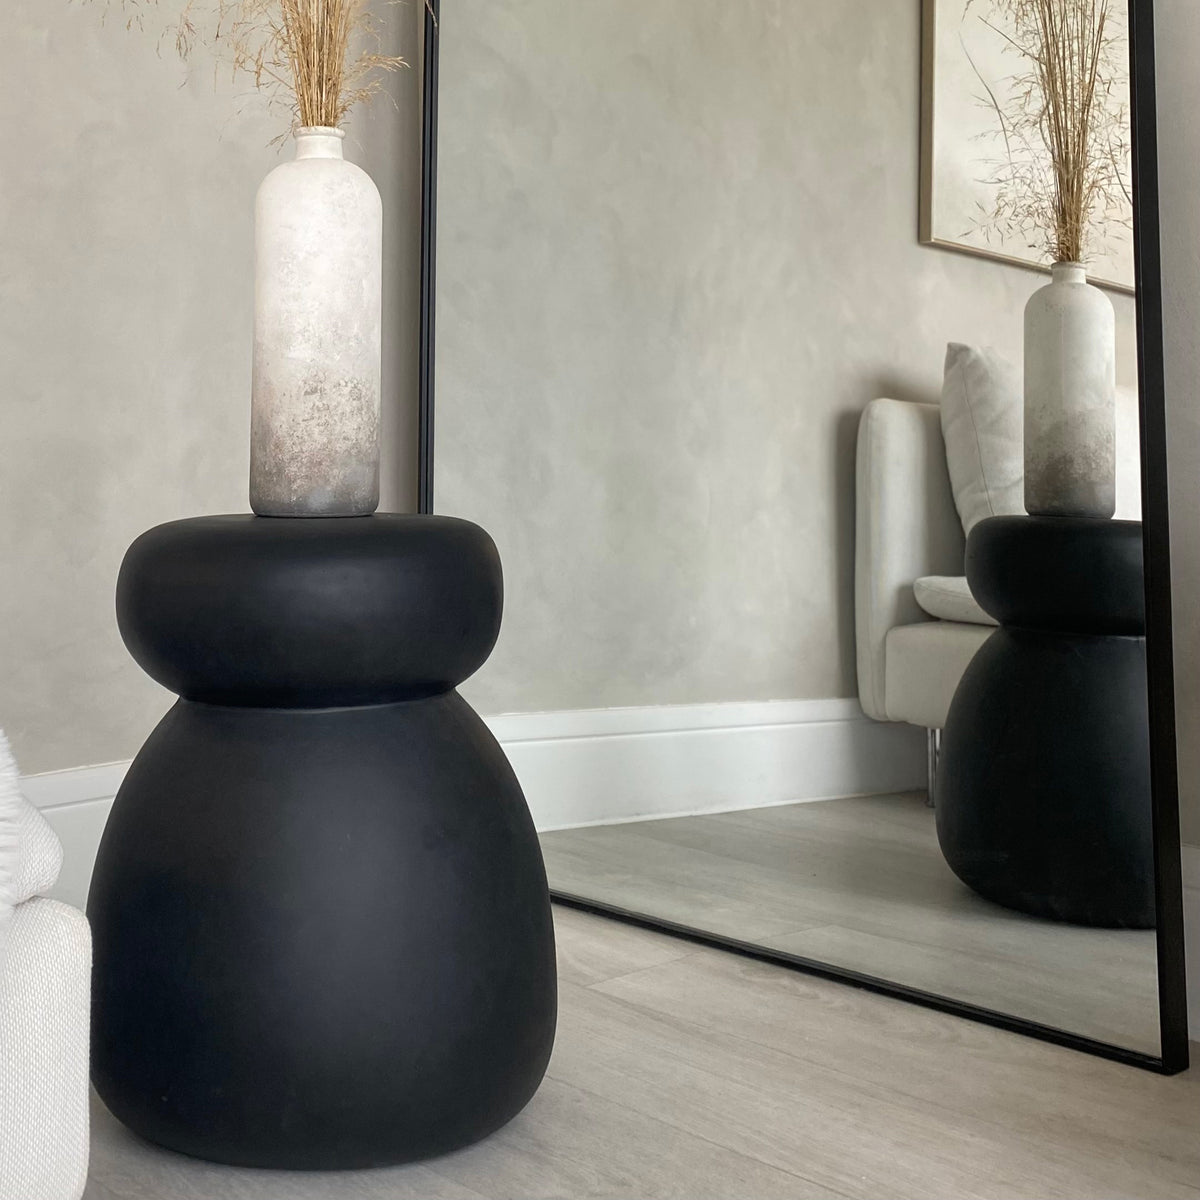 Minimal Onyx Side Table displaying tall vase